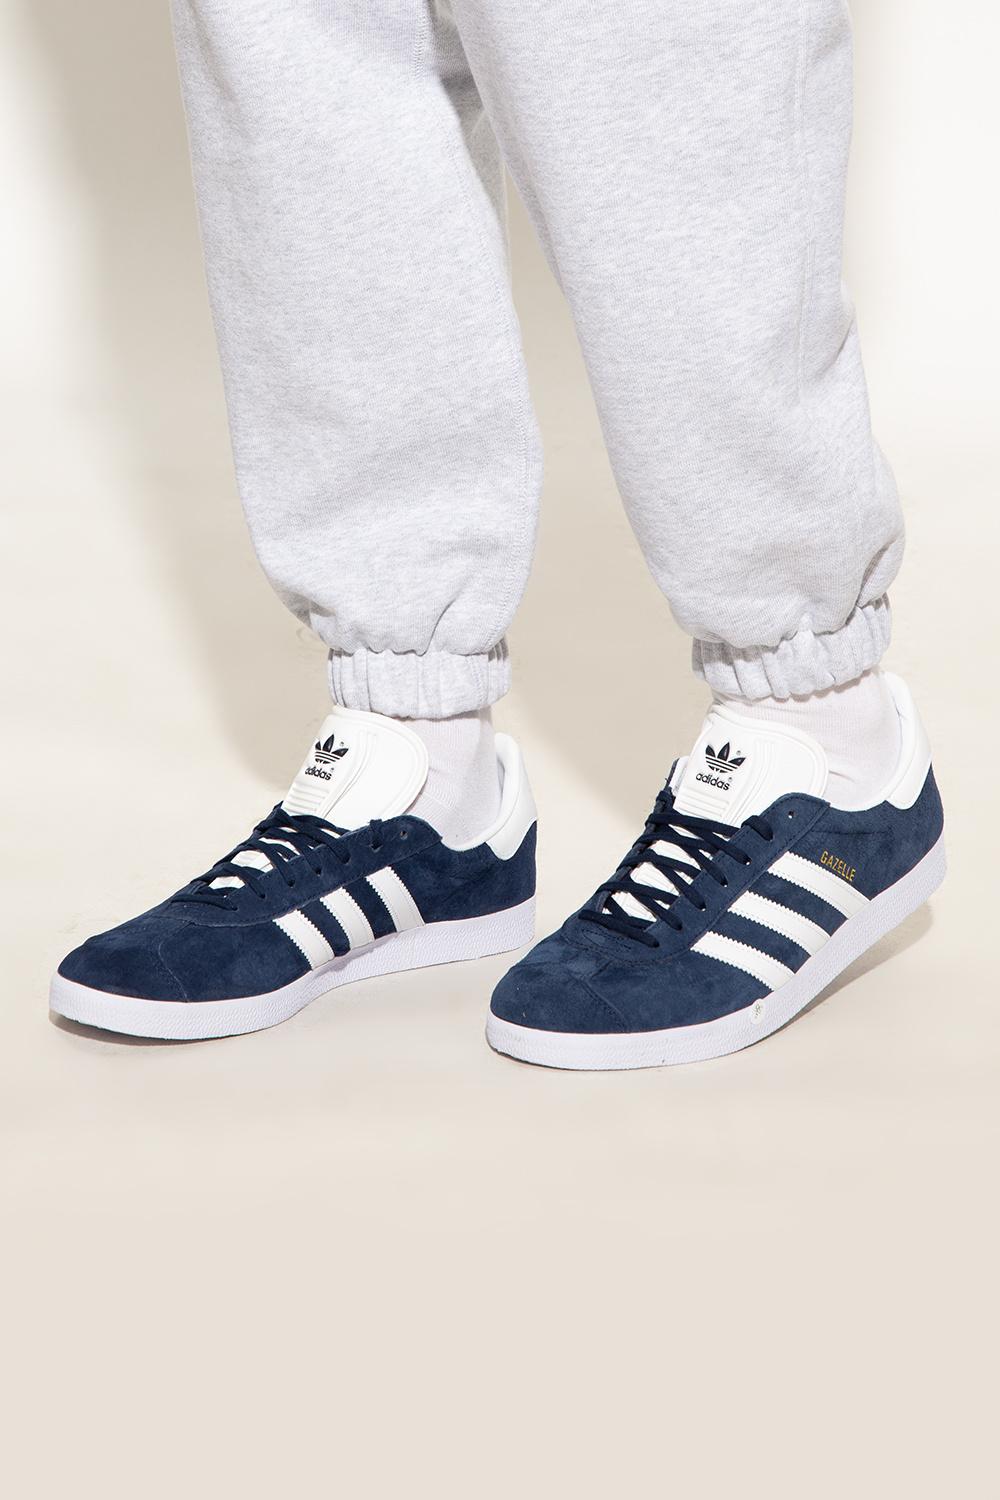 adidas Originals Suede 'gazelle' Sneakers in Navy Blue (Blue) for Men | Lyst